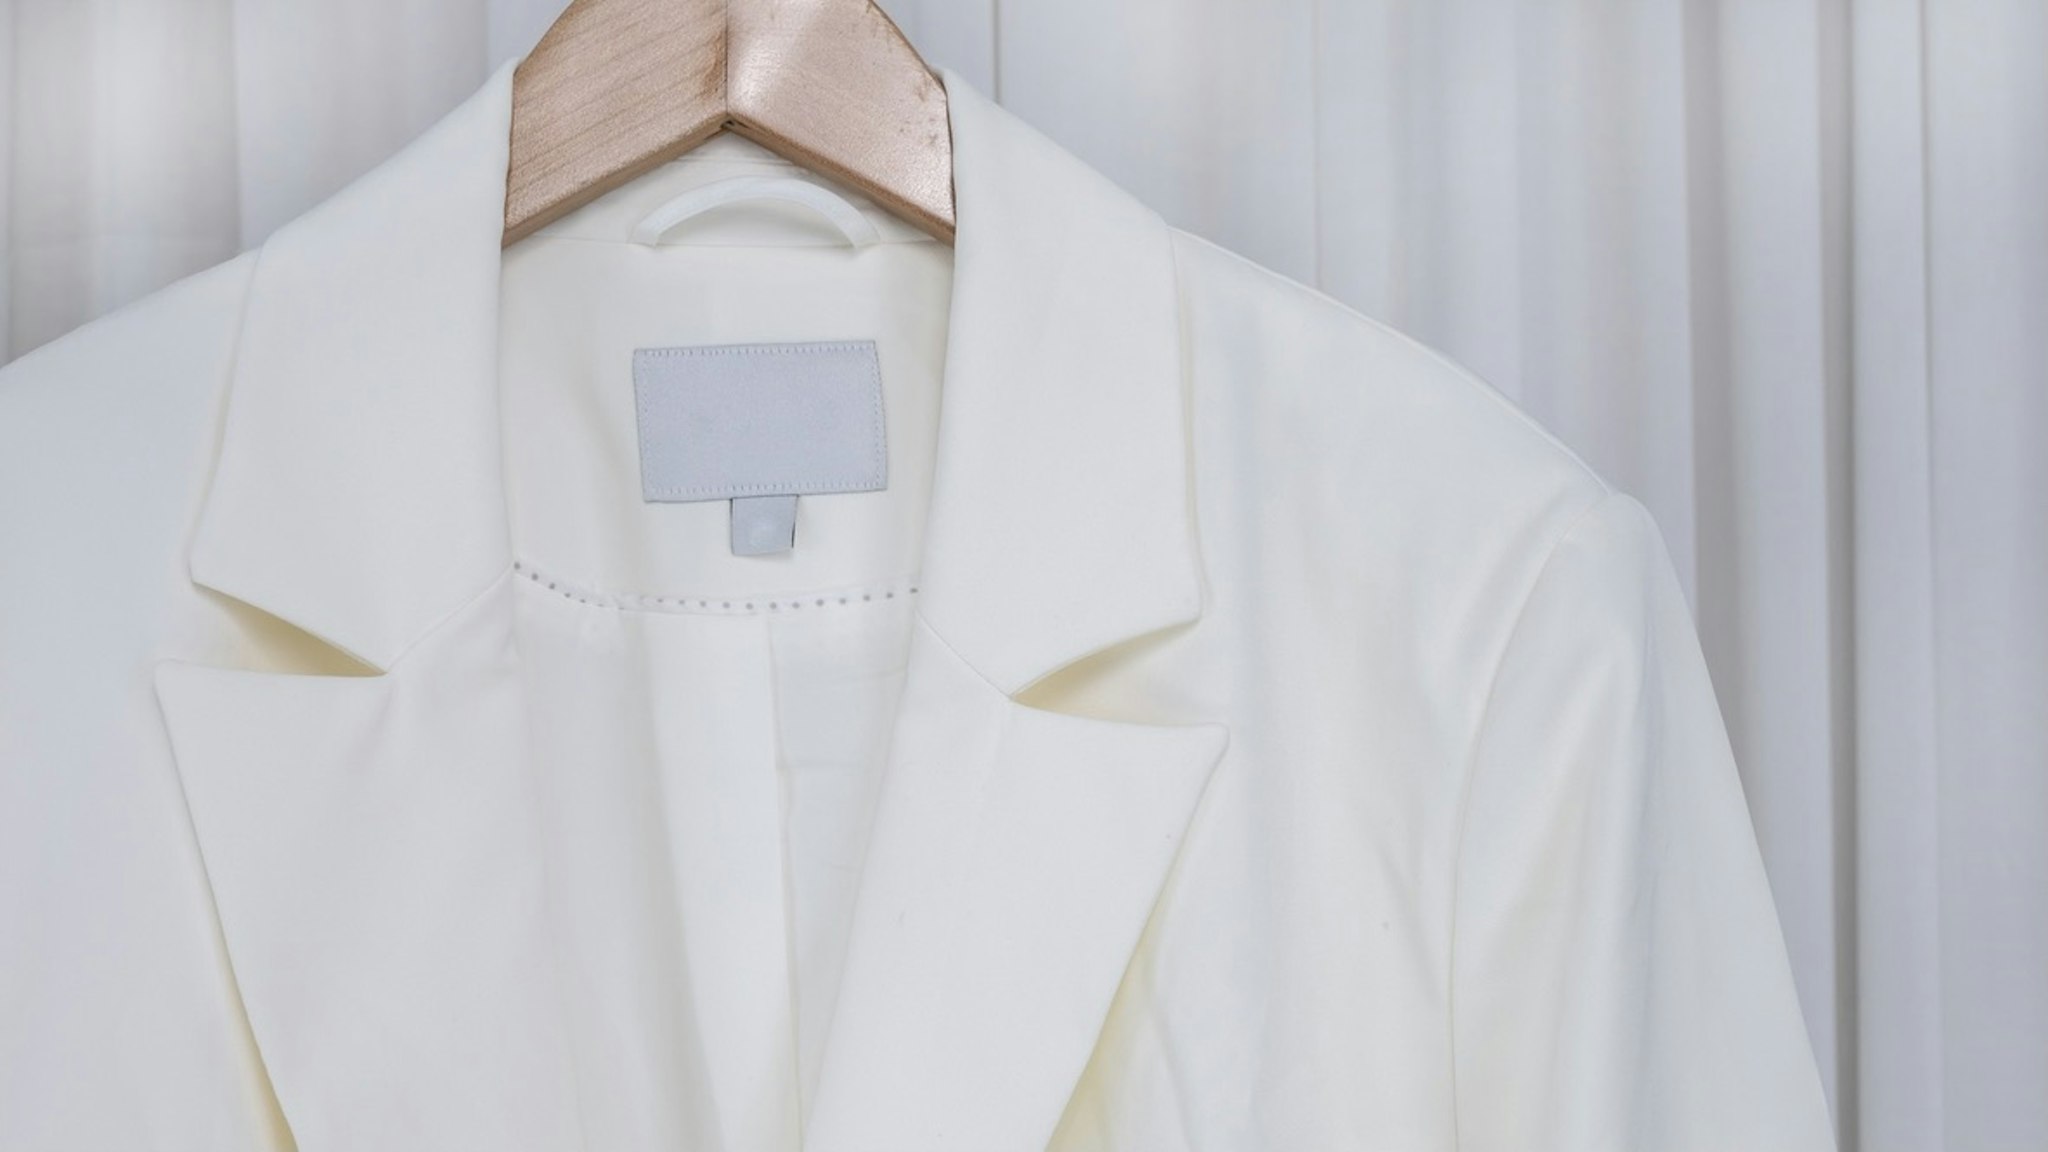 Close up white blazer - stock photo white blazer jacket Hanging On Rack At Home kampee patisena via Getty Images